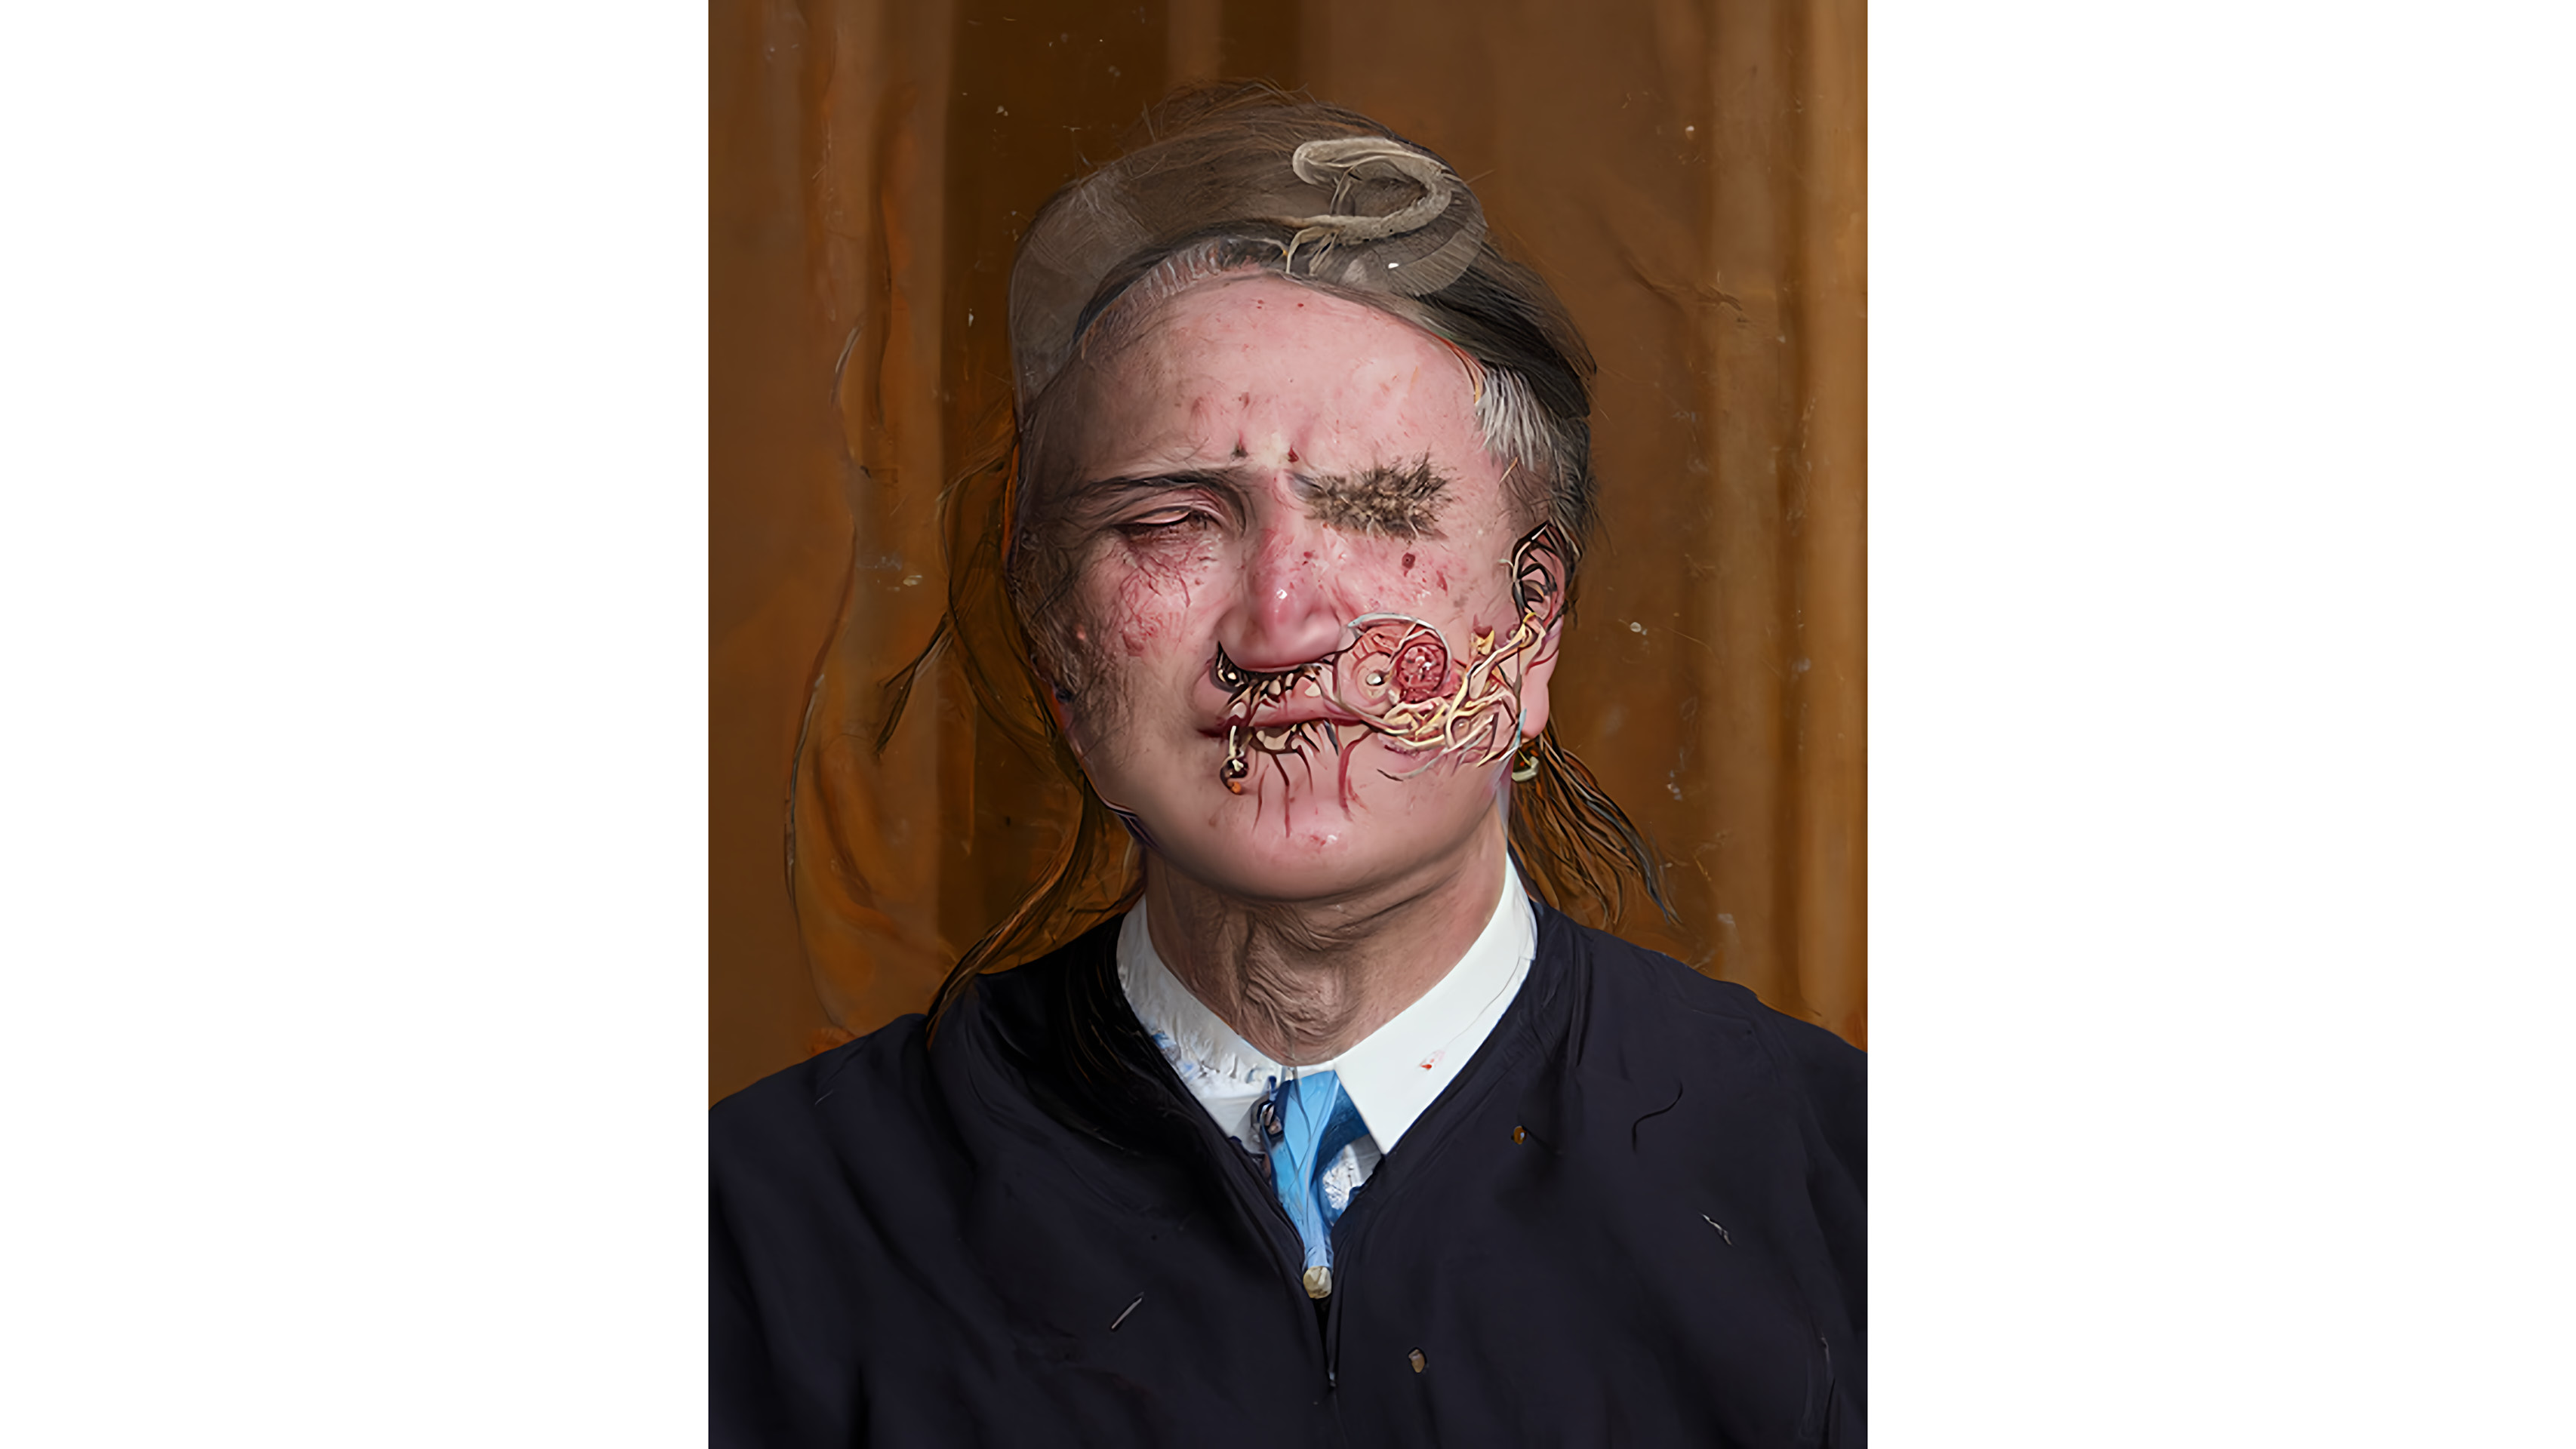 AI manipulated portrait of Brett Kavanaugh